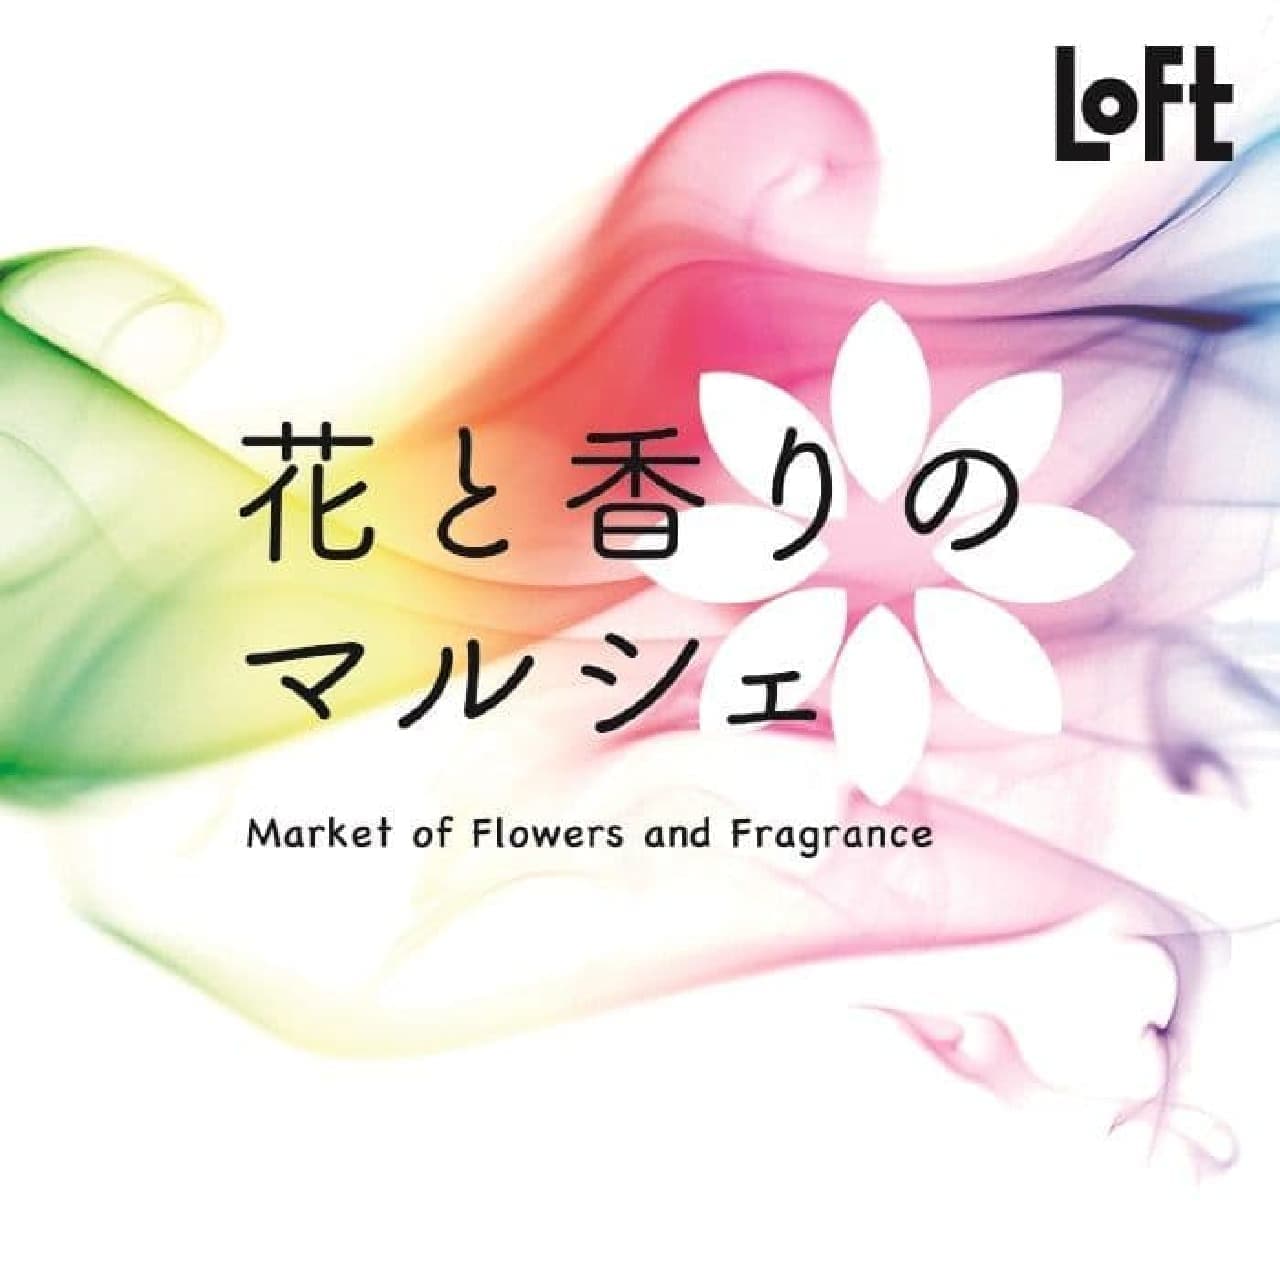 loft -Marche of Flowers and Fragrances -Kummokusei